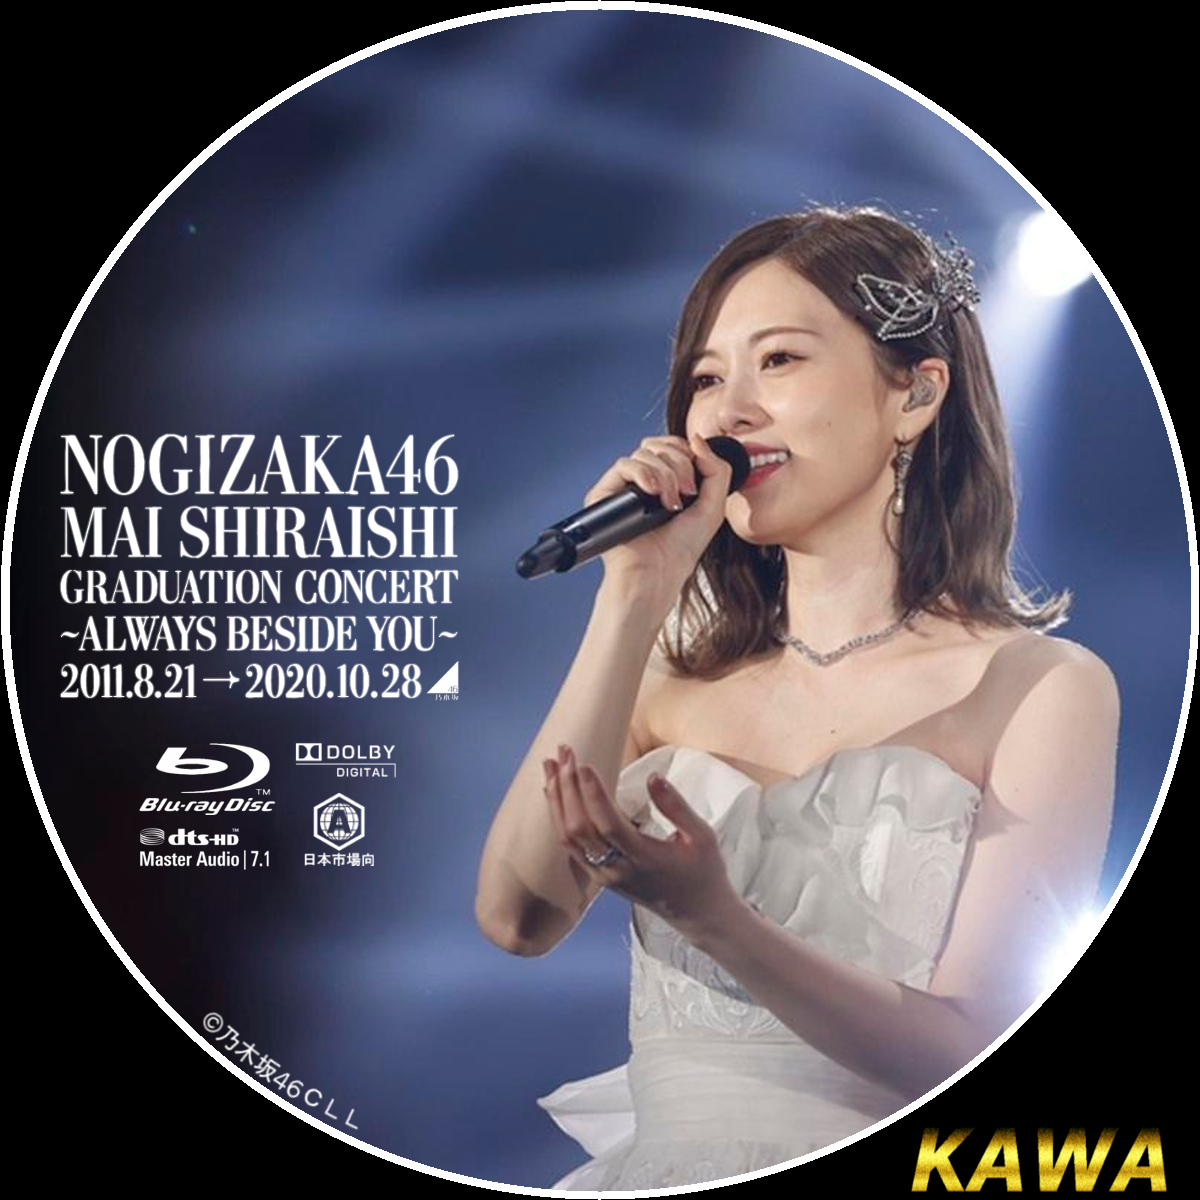 NOGIZAKA46 Mai Shiraishi Graduation Concert 〜Always beside you 